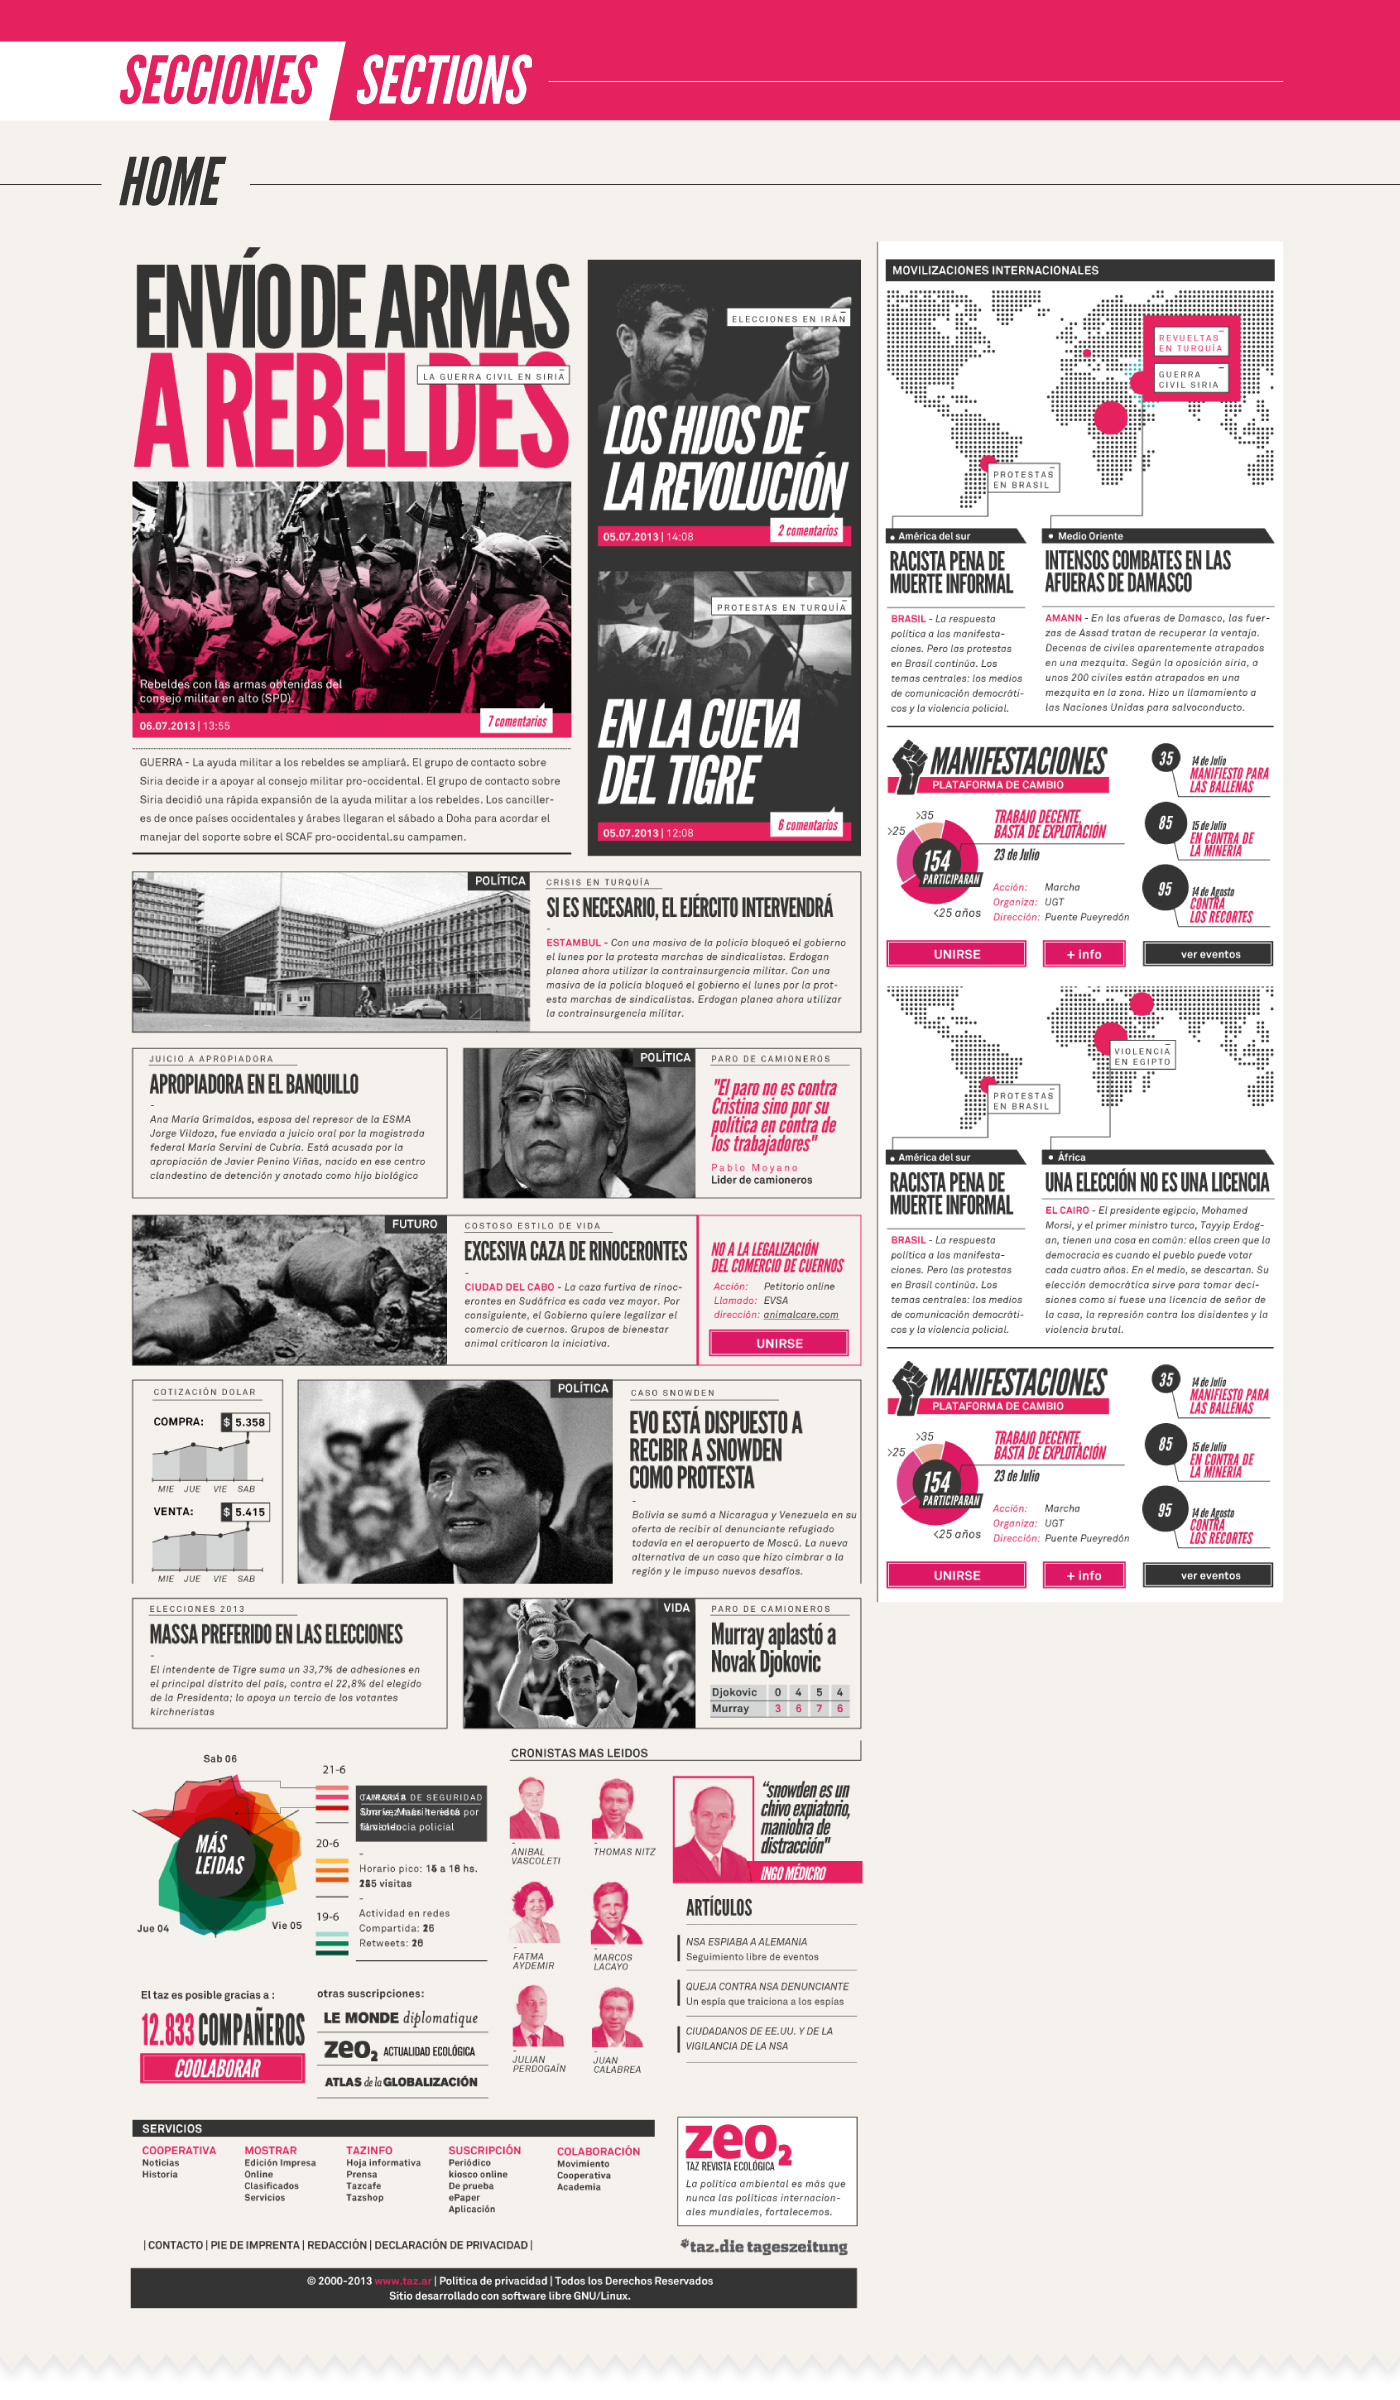 Gabriele diario TAZ germany interfaz schematic information infographic newspapper Web socialism app digital online